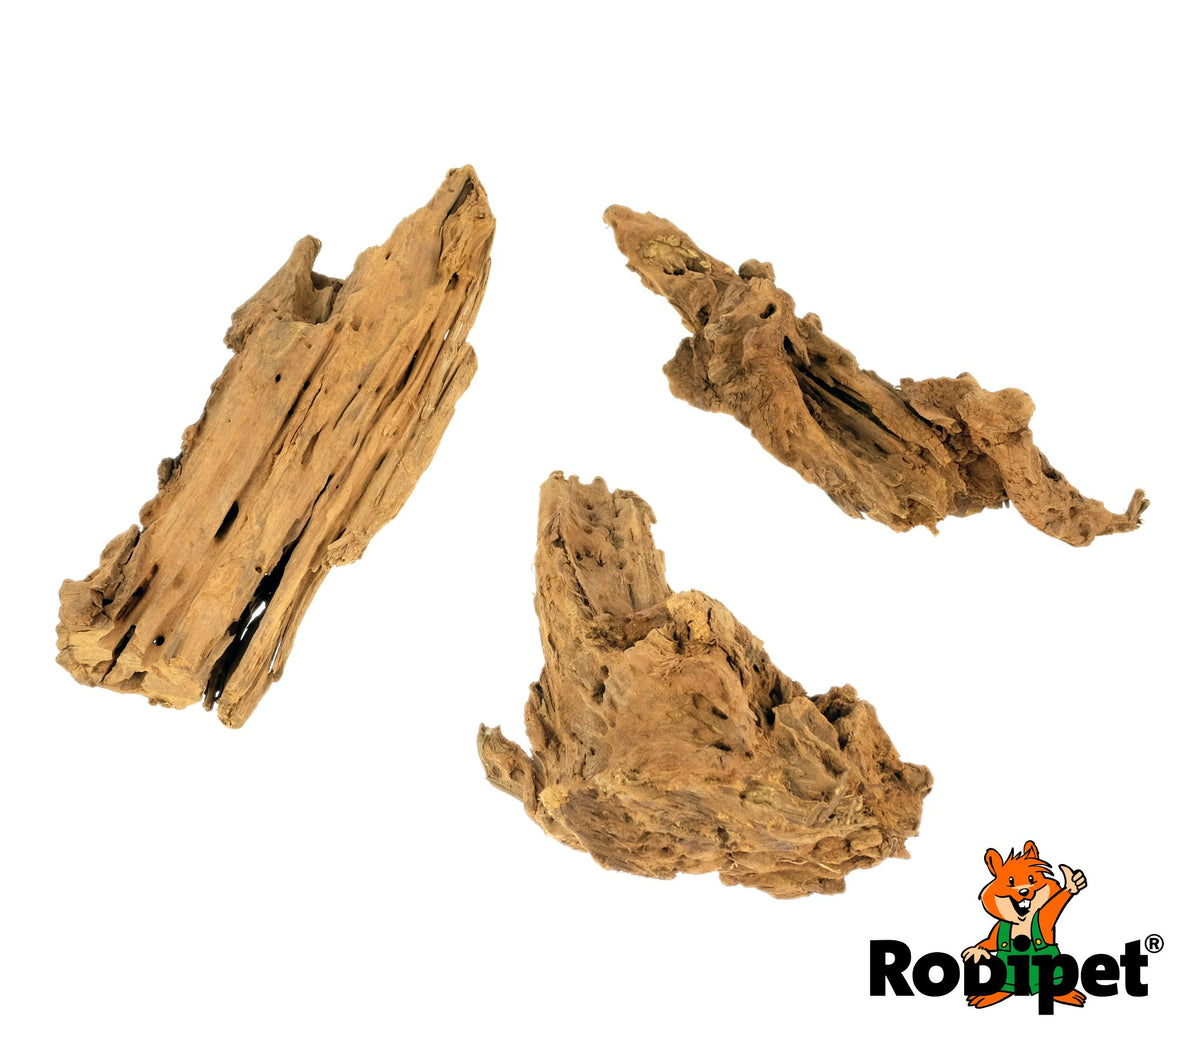 Rodipet® Kempas Wood Climbing Block 24-35 cm